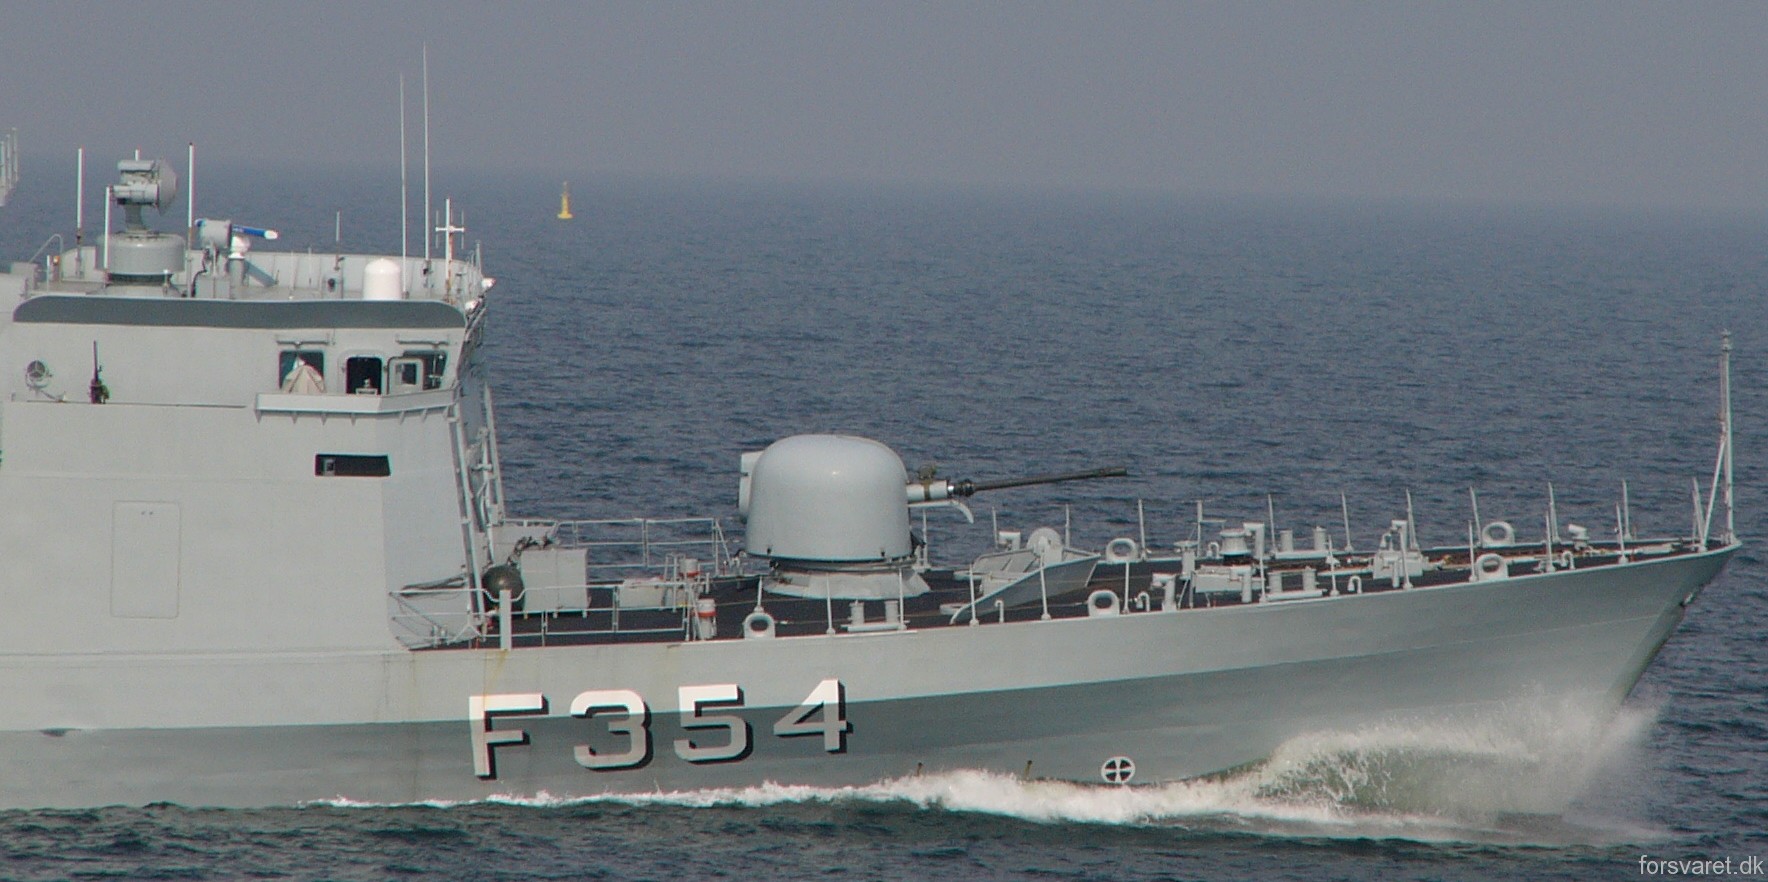 f-354 hdms niels juel class corvette royal danish navy kongelige danske marine kdm 78 oto melara 76/62 sr gun